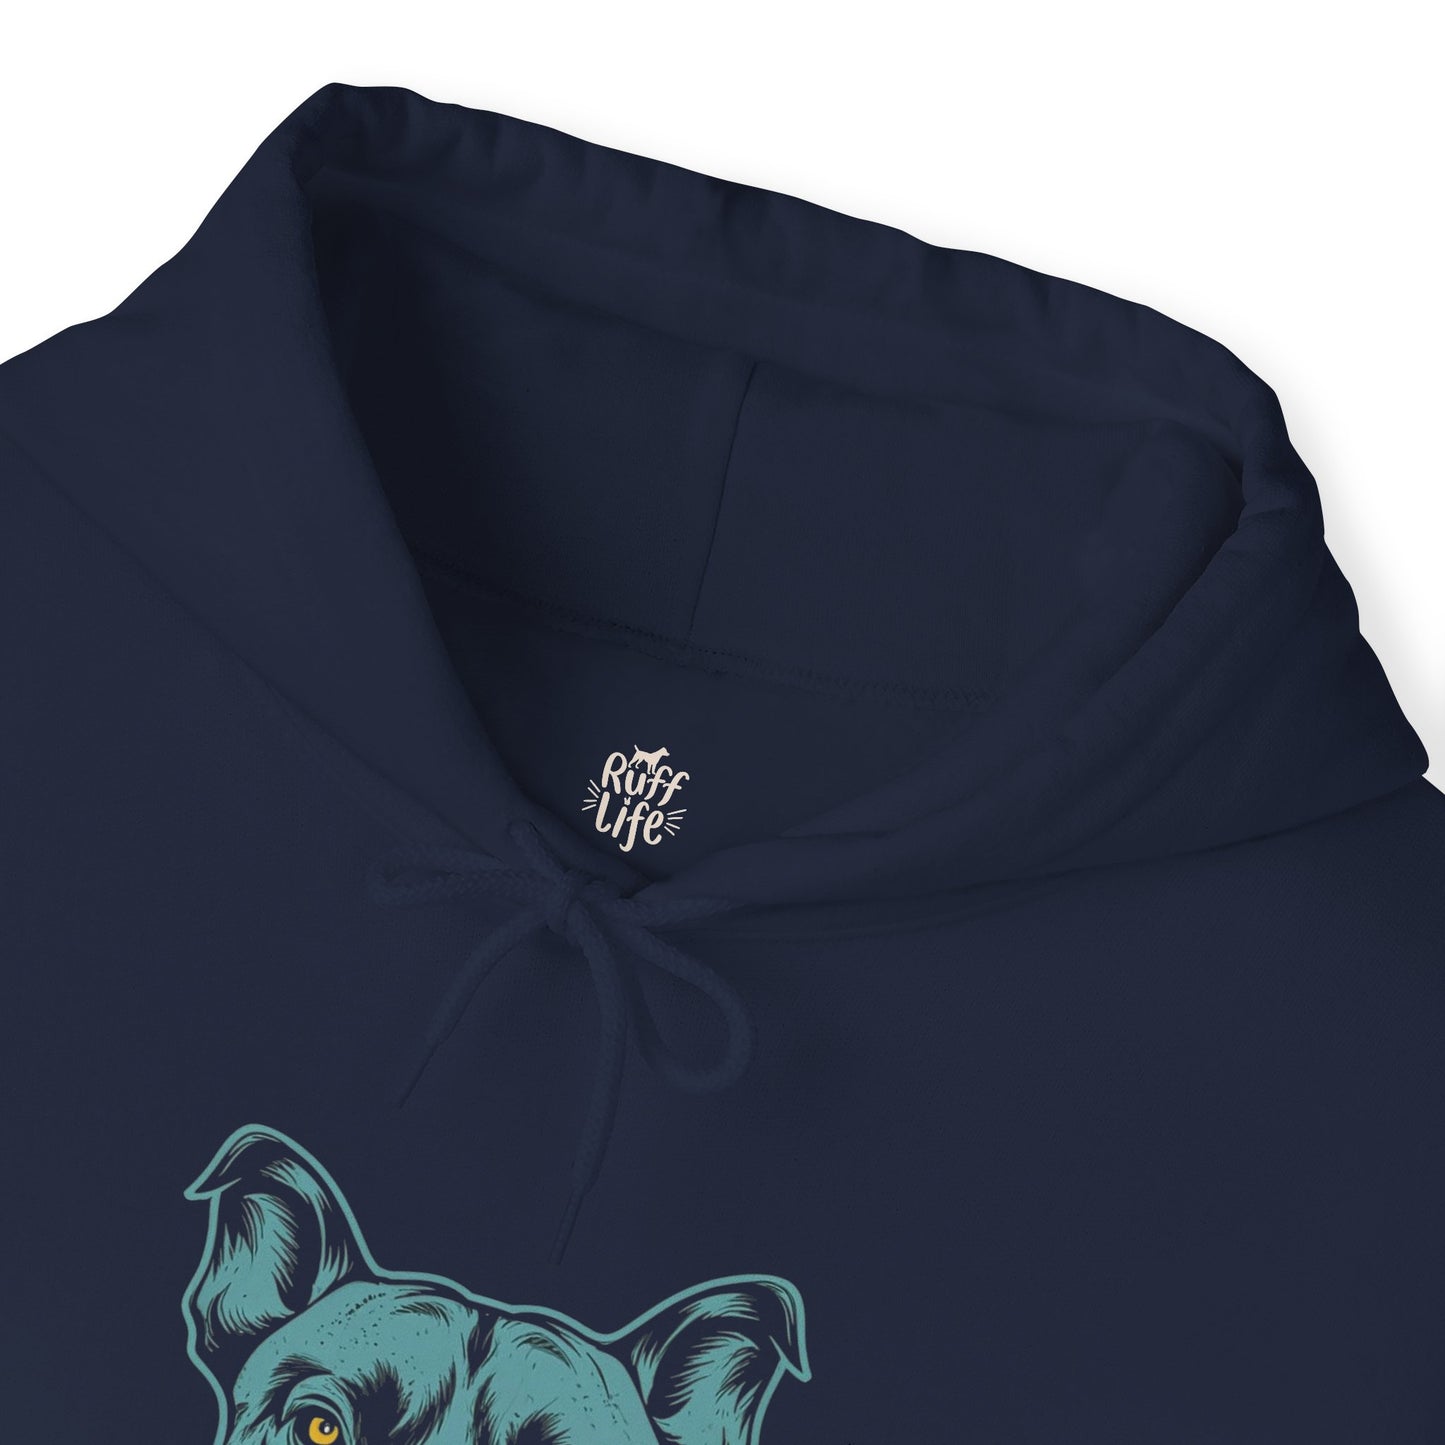 Pit Bull Blue Portrait Collection Unisex Heavy Blend™ Hooded Sweatshirt